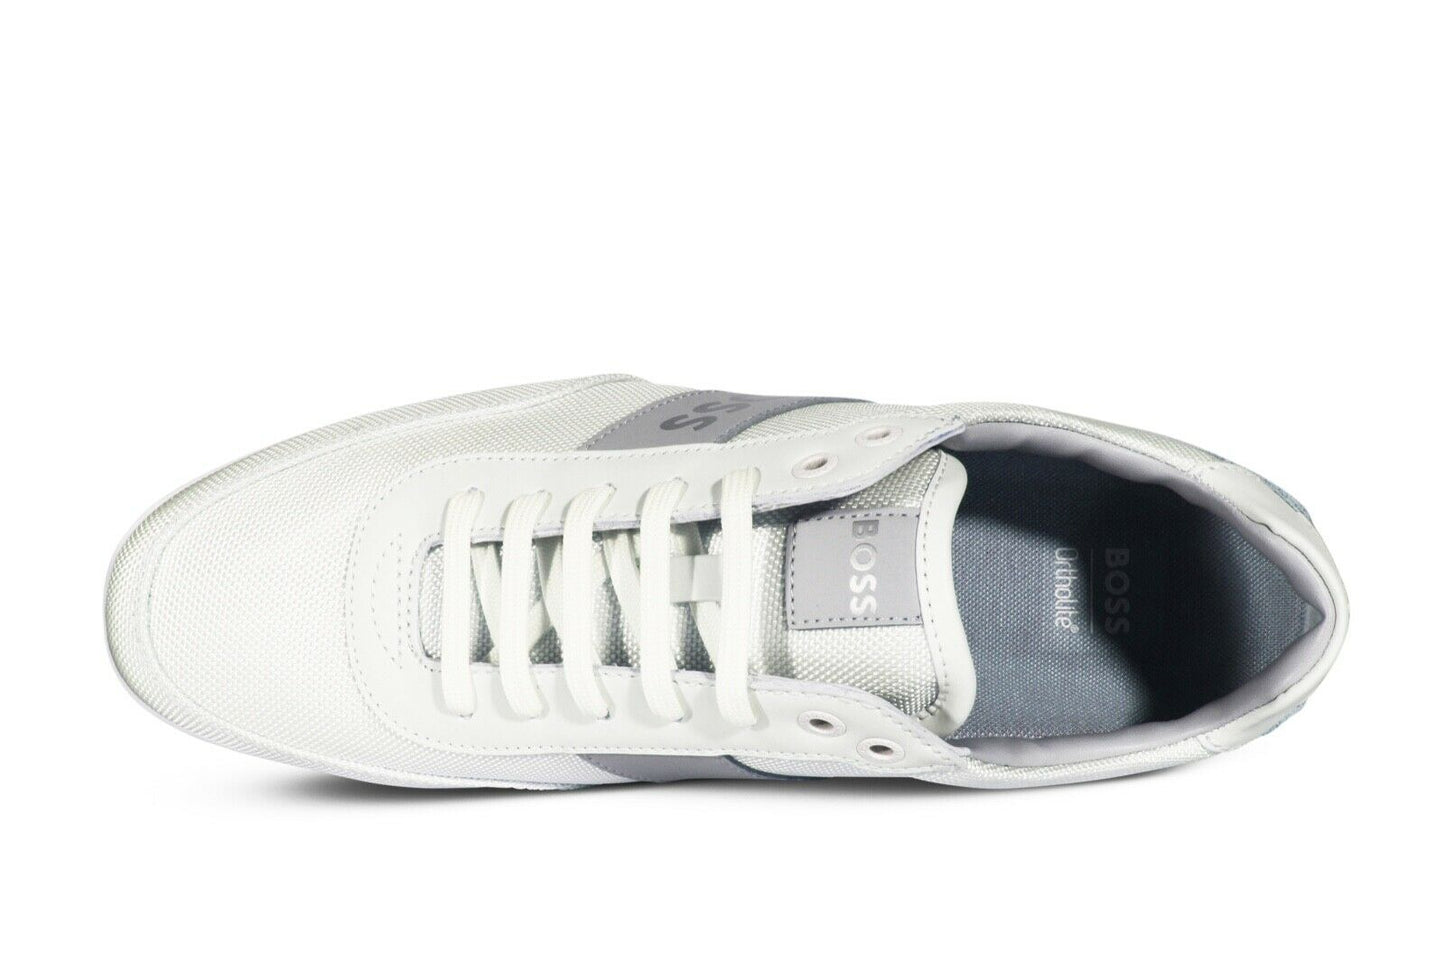 HUGO BOSS Saturn_Lowp_nylg Men’s Sneakers in White 50470364 100